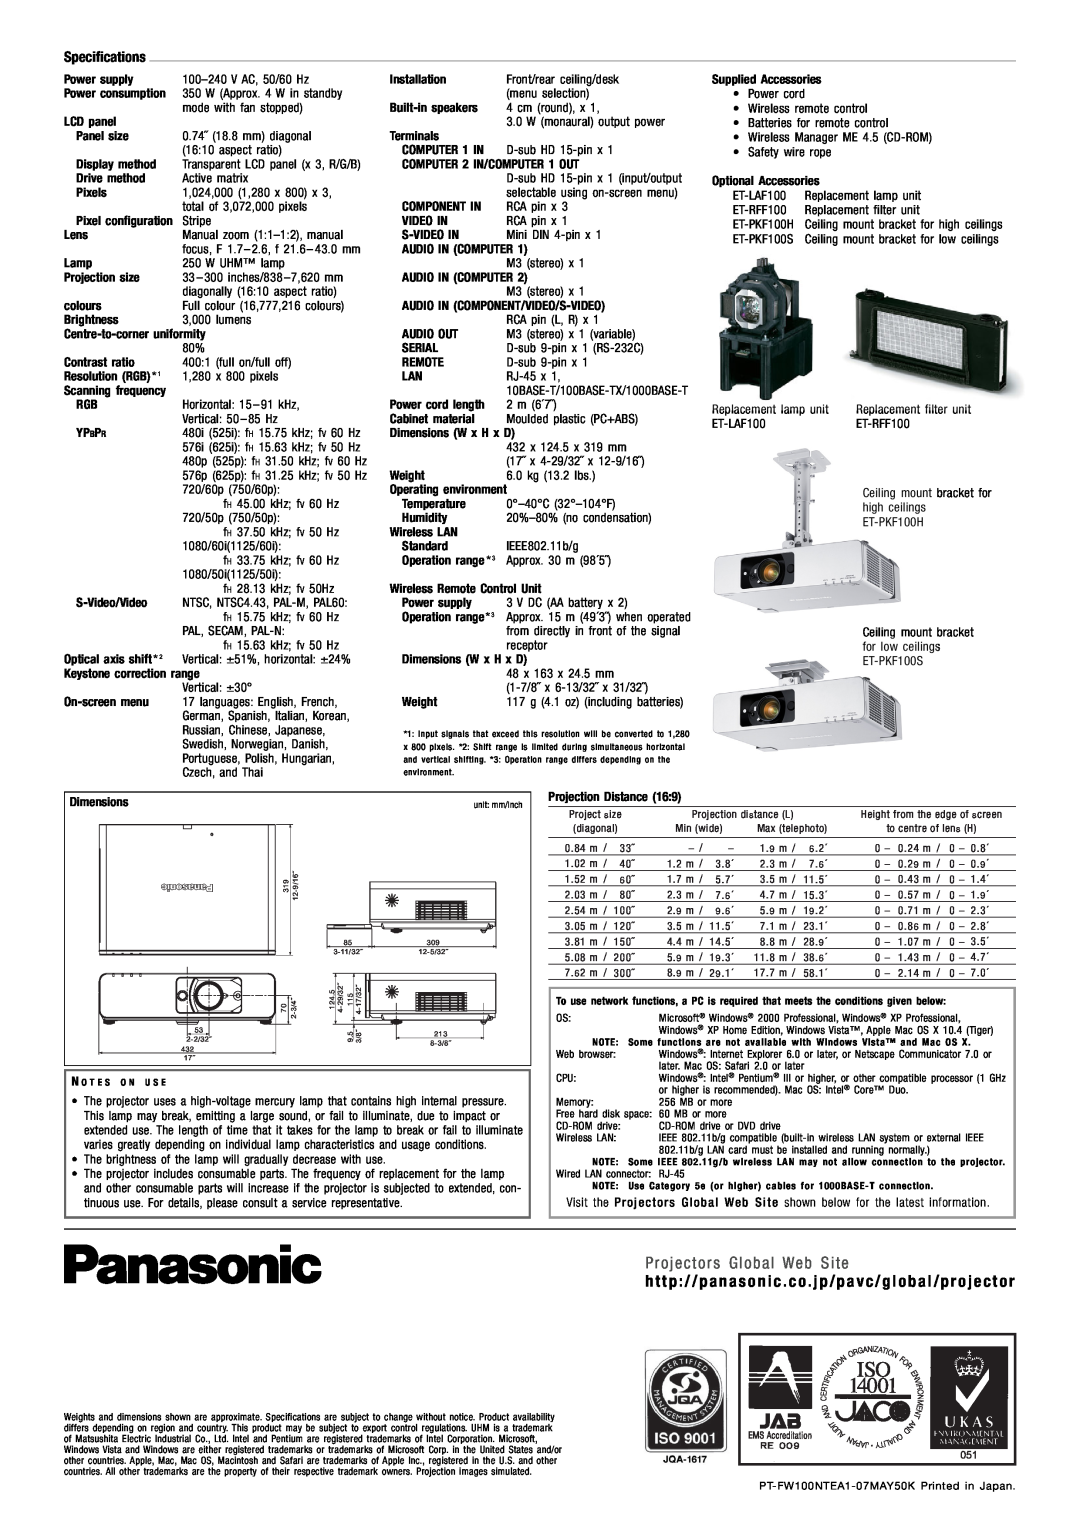 Panasonic PT-FW100NTEA manual Projectors Global Web Site, Dimensions 